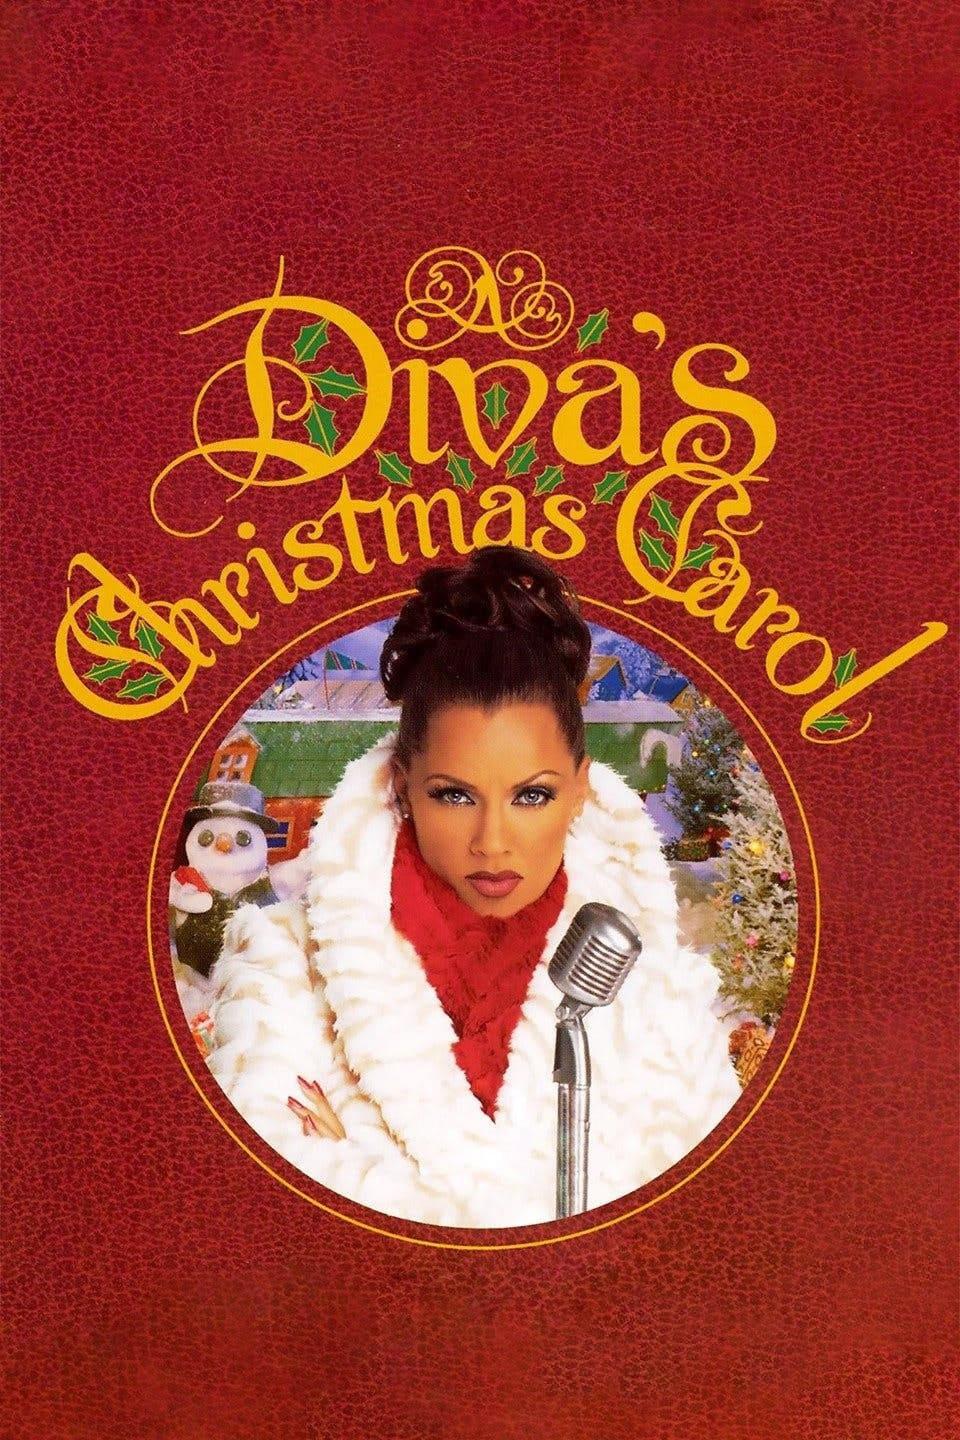 A Diva's Christmas Carol poster